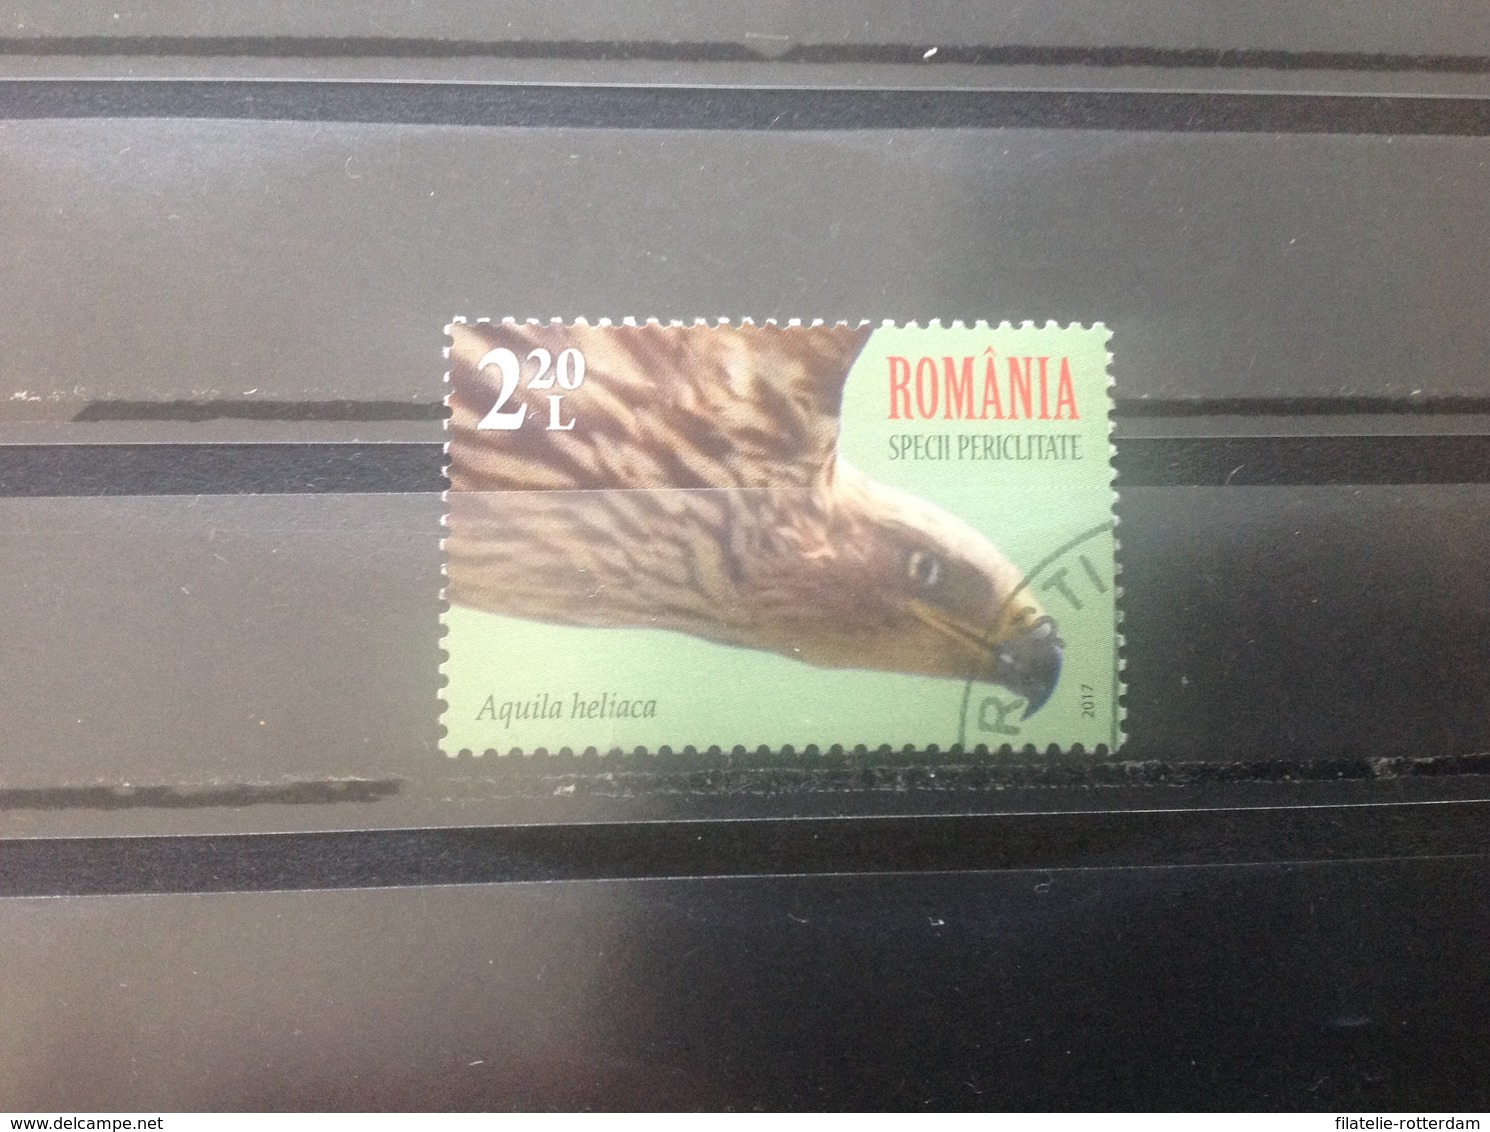 Roemenië / Romania - Bedreigde Diersoorten (2.20) 2017 - Used Stamps